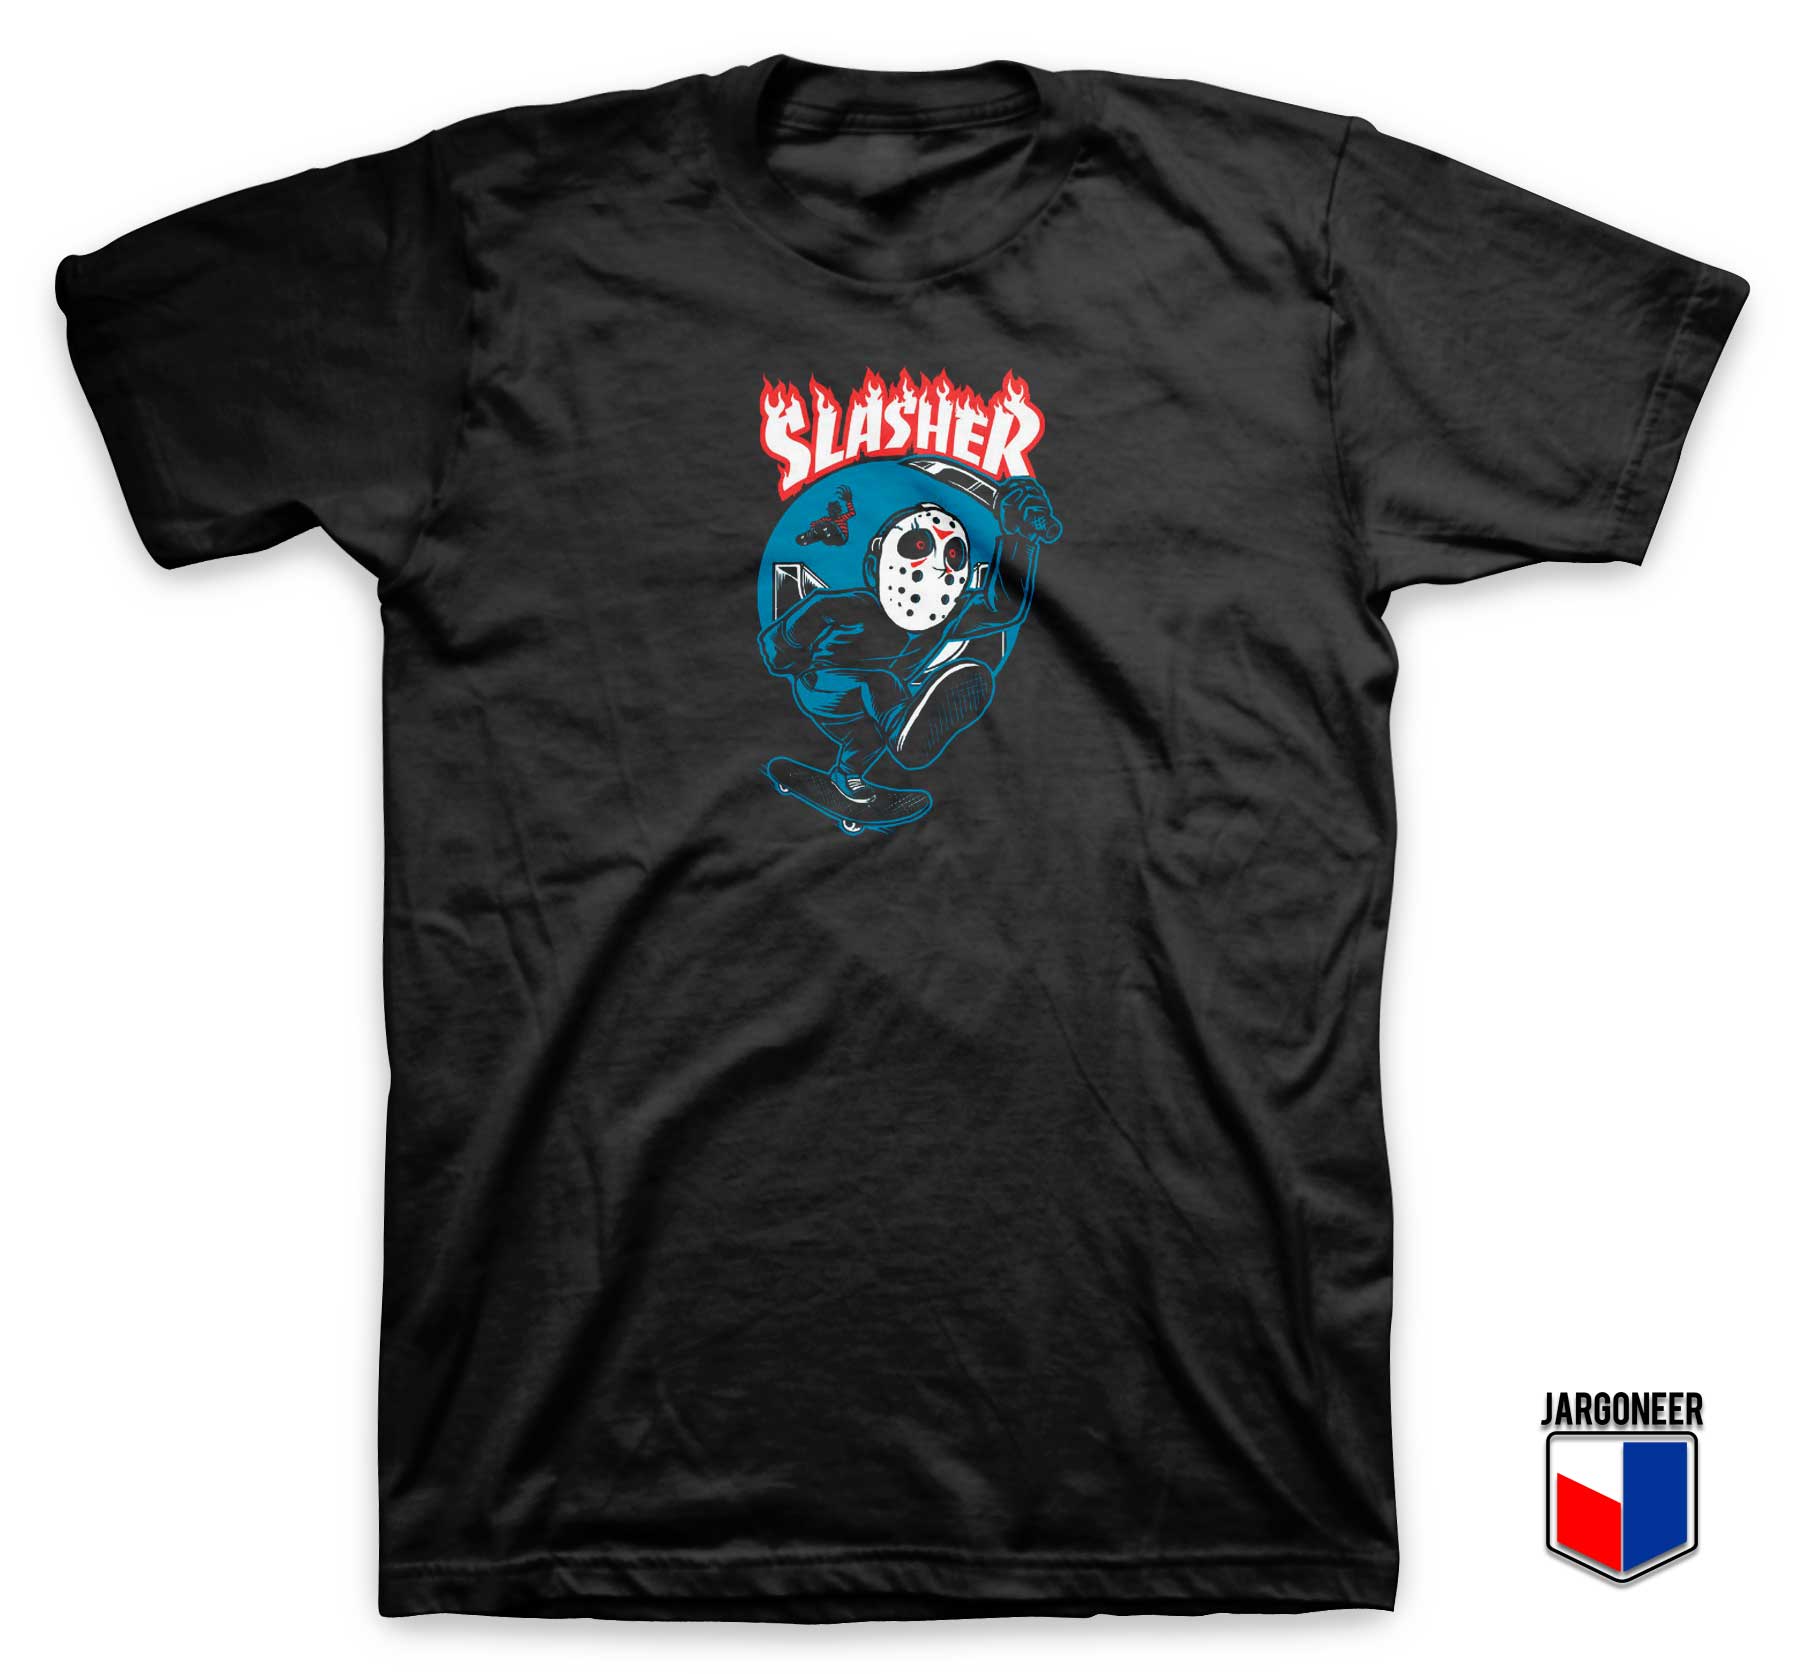 Friday Killer 13 Slasher Parody T Shirt - Shop Unique Graphic Cool Shirt Designs